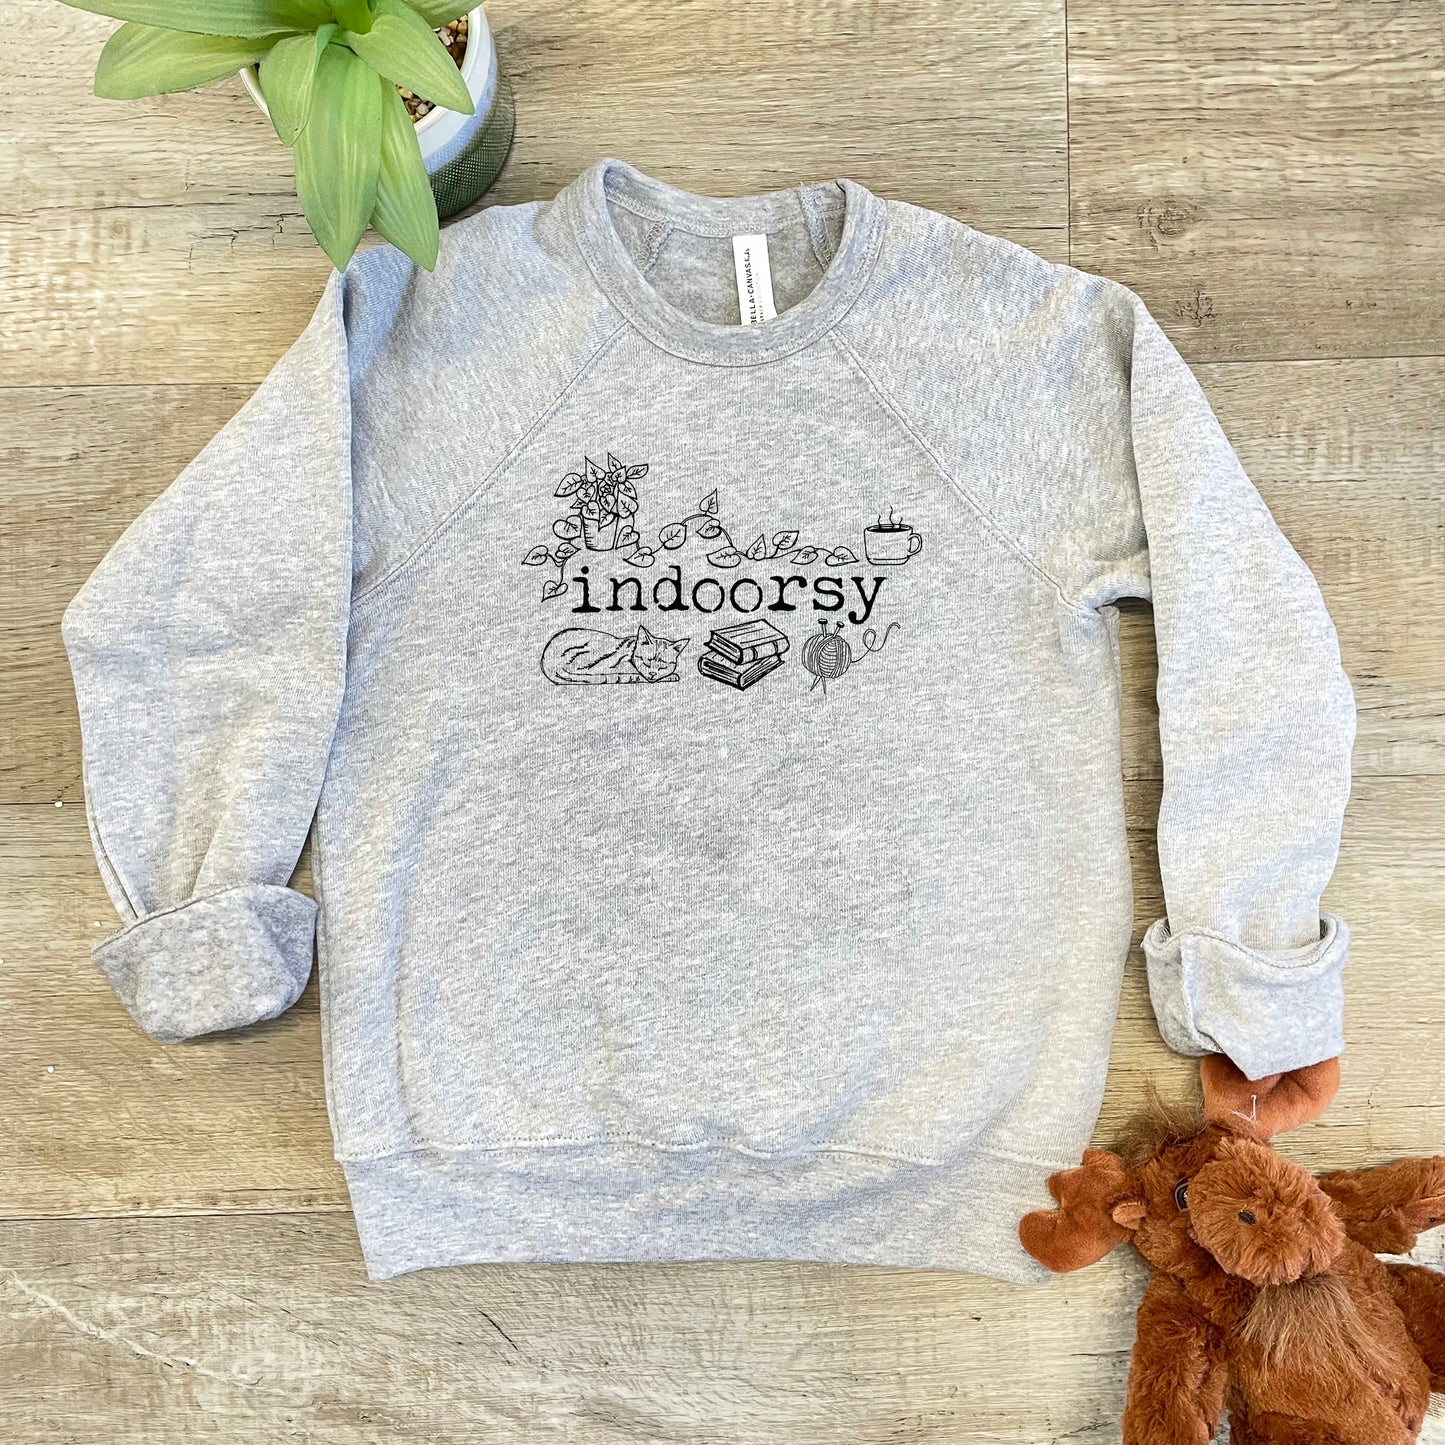 Indoorsy (Introverts, Cat) - Kid's Sweatshirt - Heather Gray or Mauve